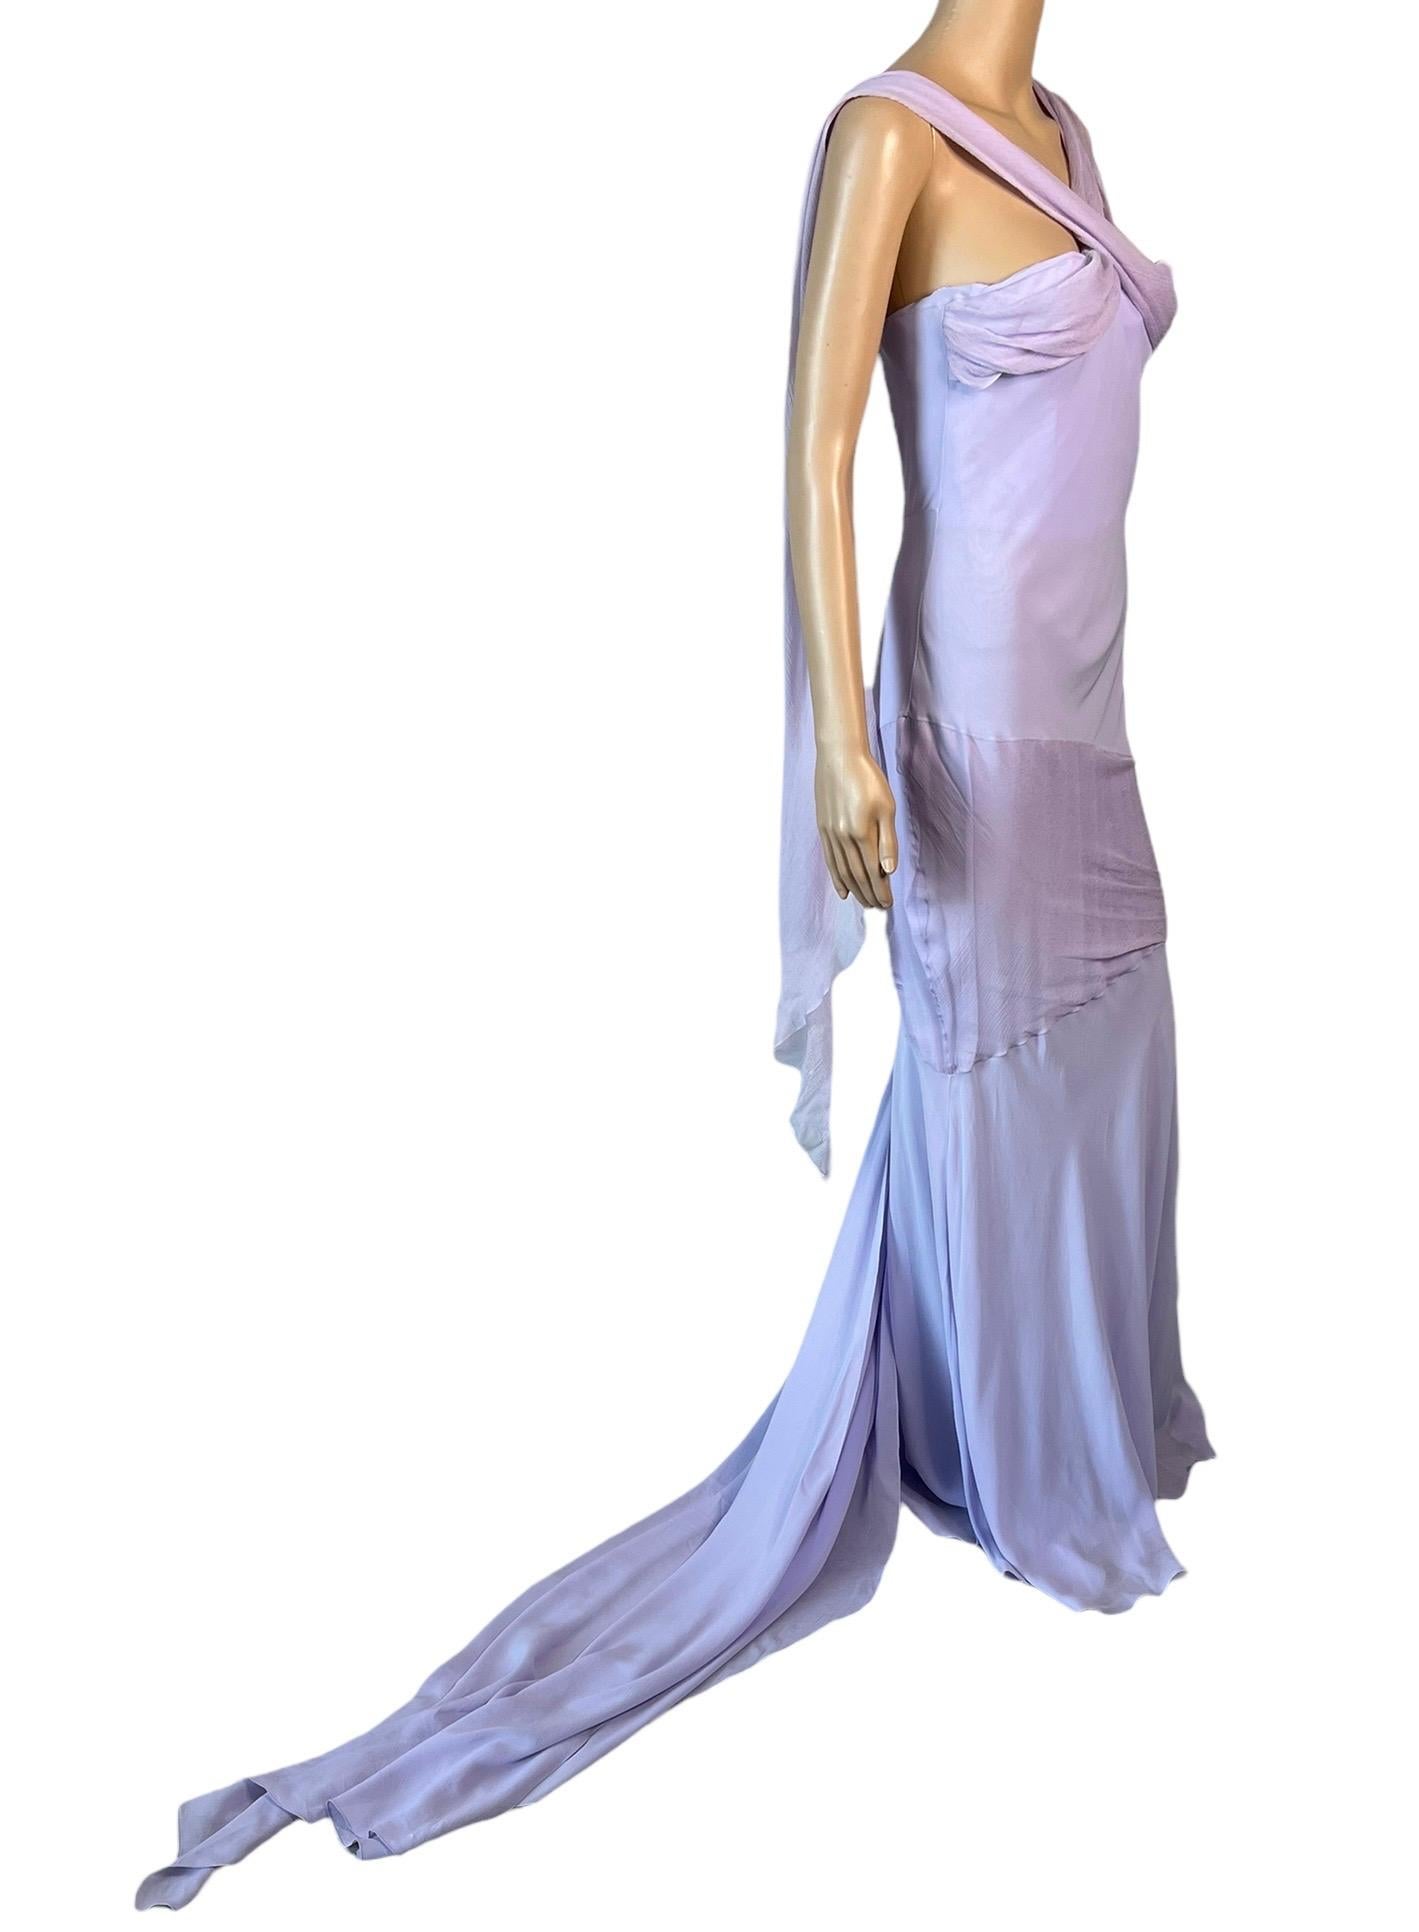 John Galliano S/S 2005 Unworn Bustier Bias Cut Silk Train Evening Dress Gown For Sale 1